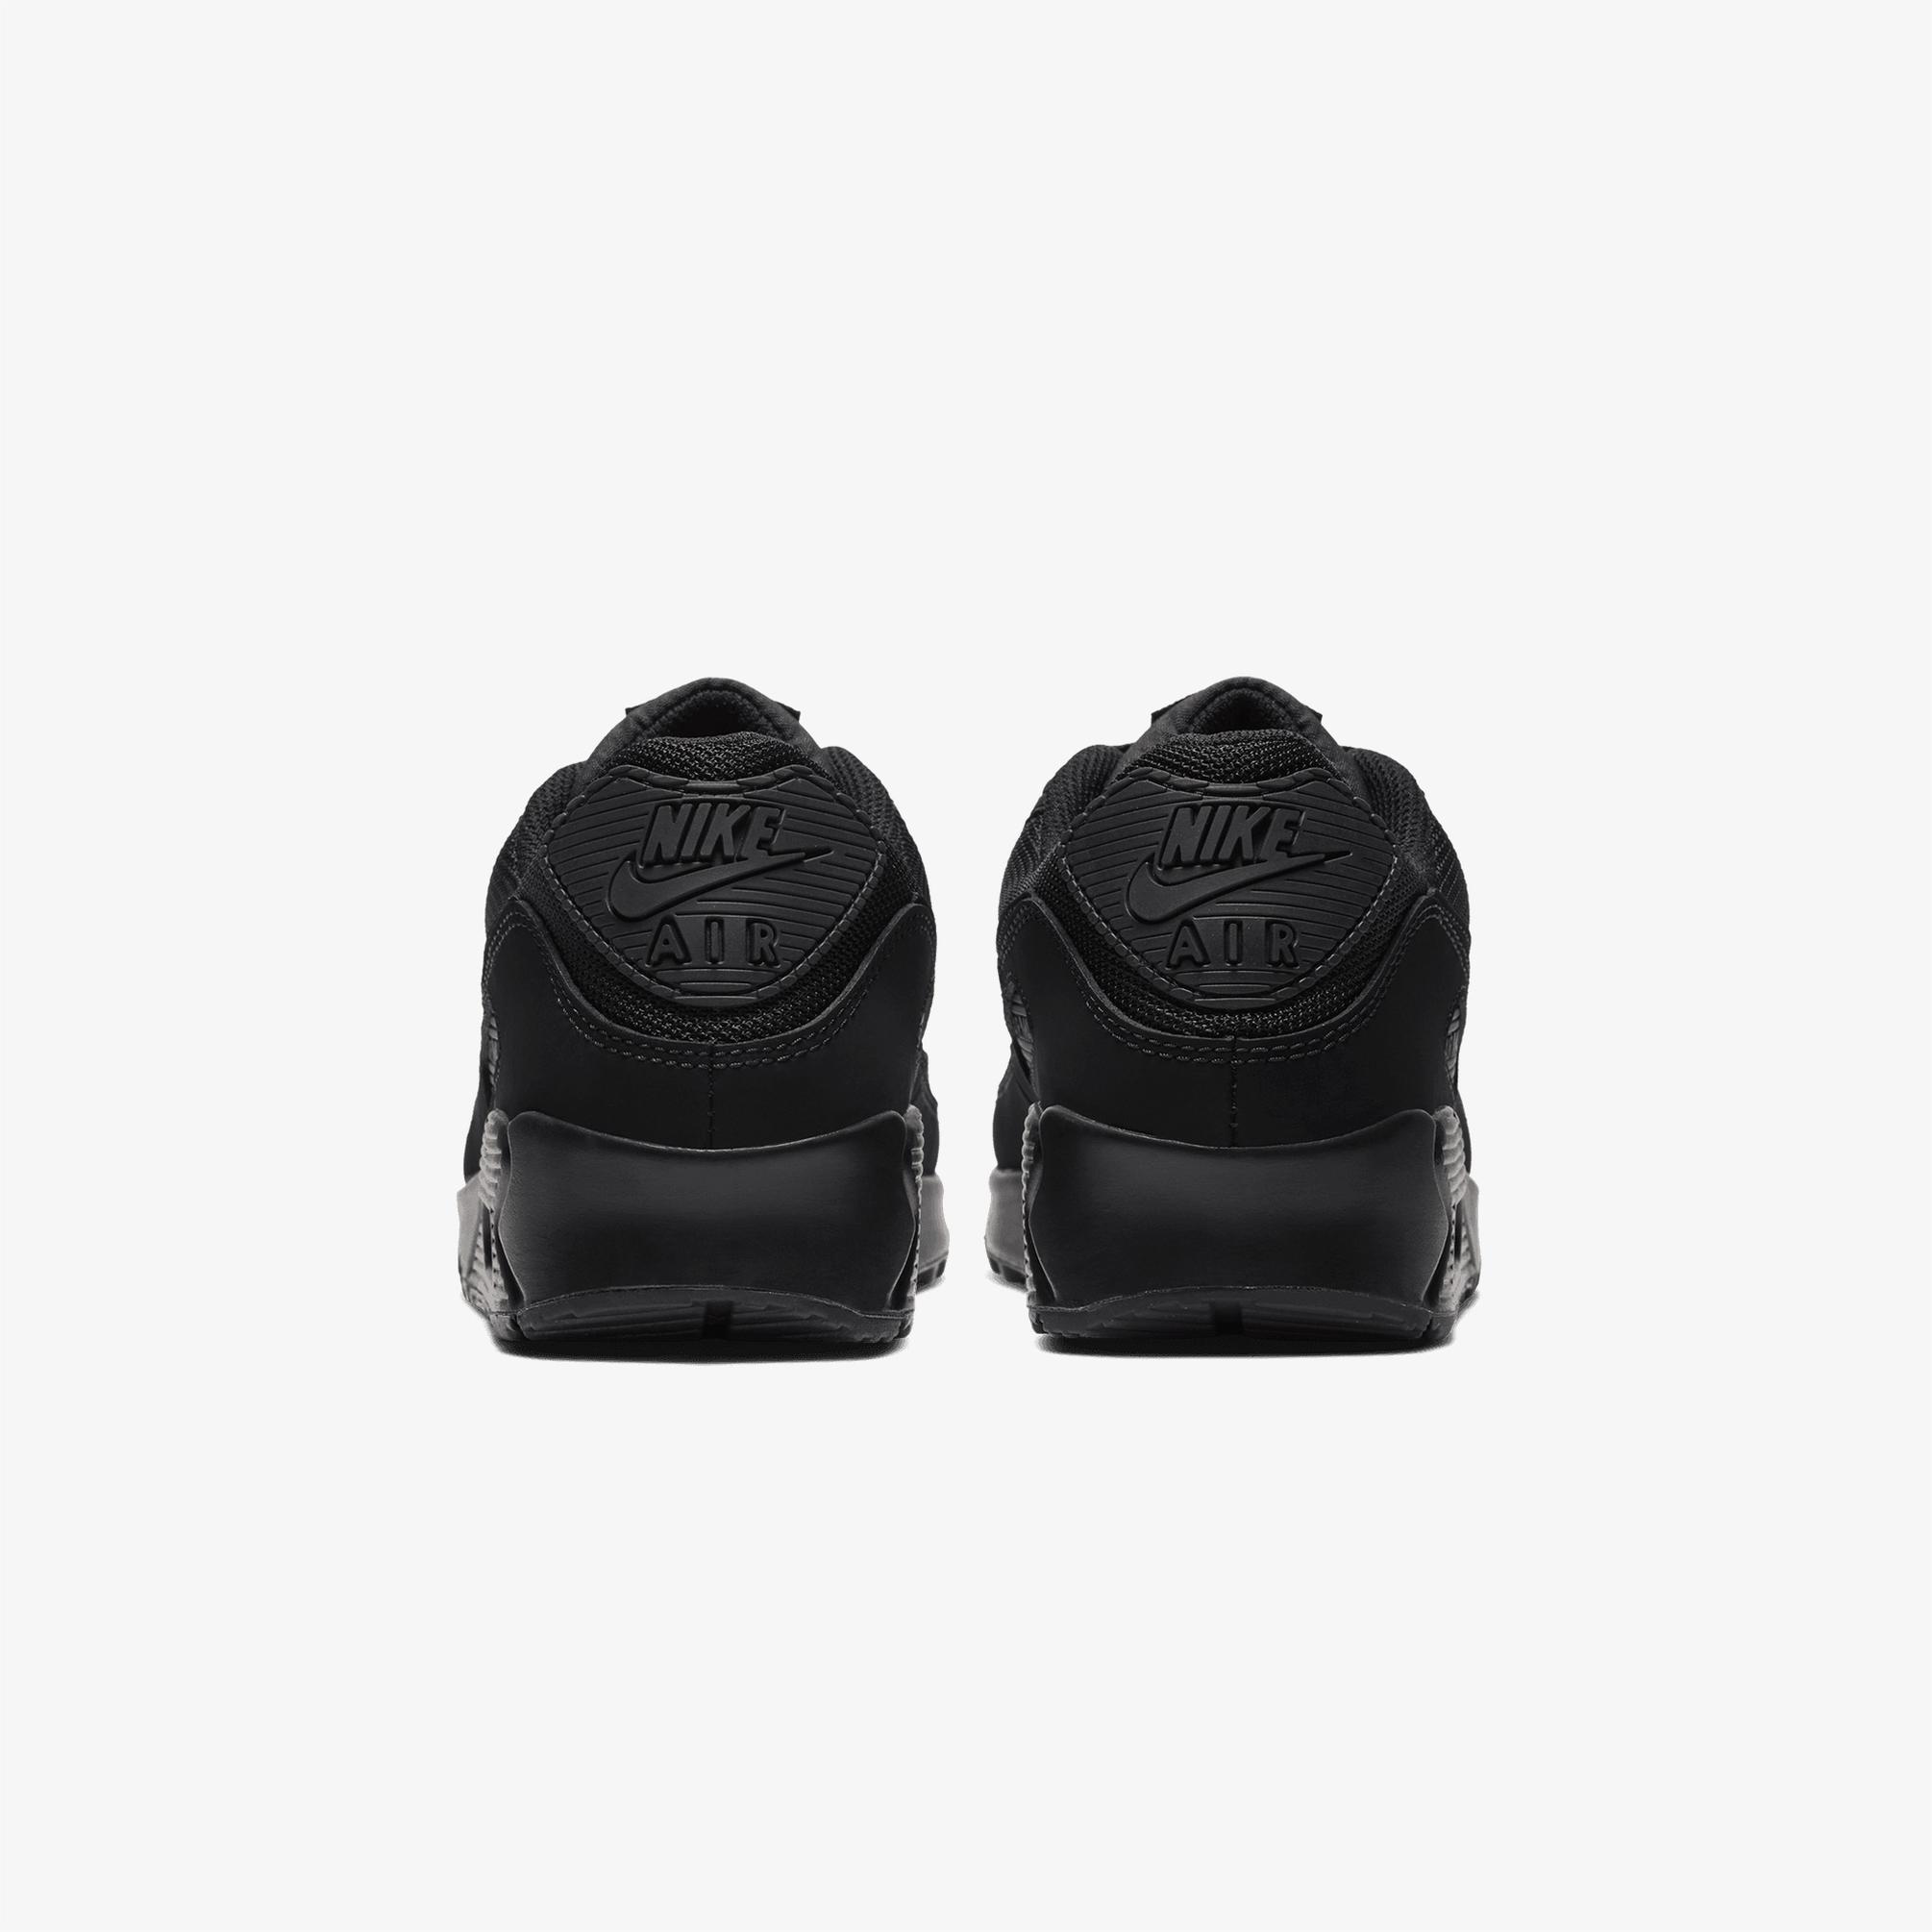  Nike Air Max 90 Erkek Siyah Spor Ayakkabı